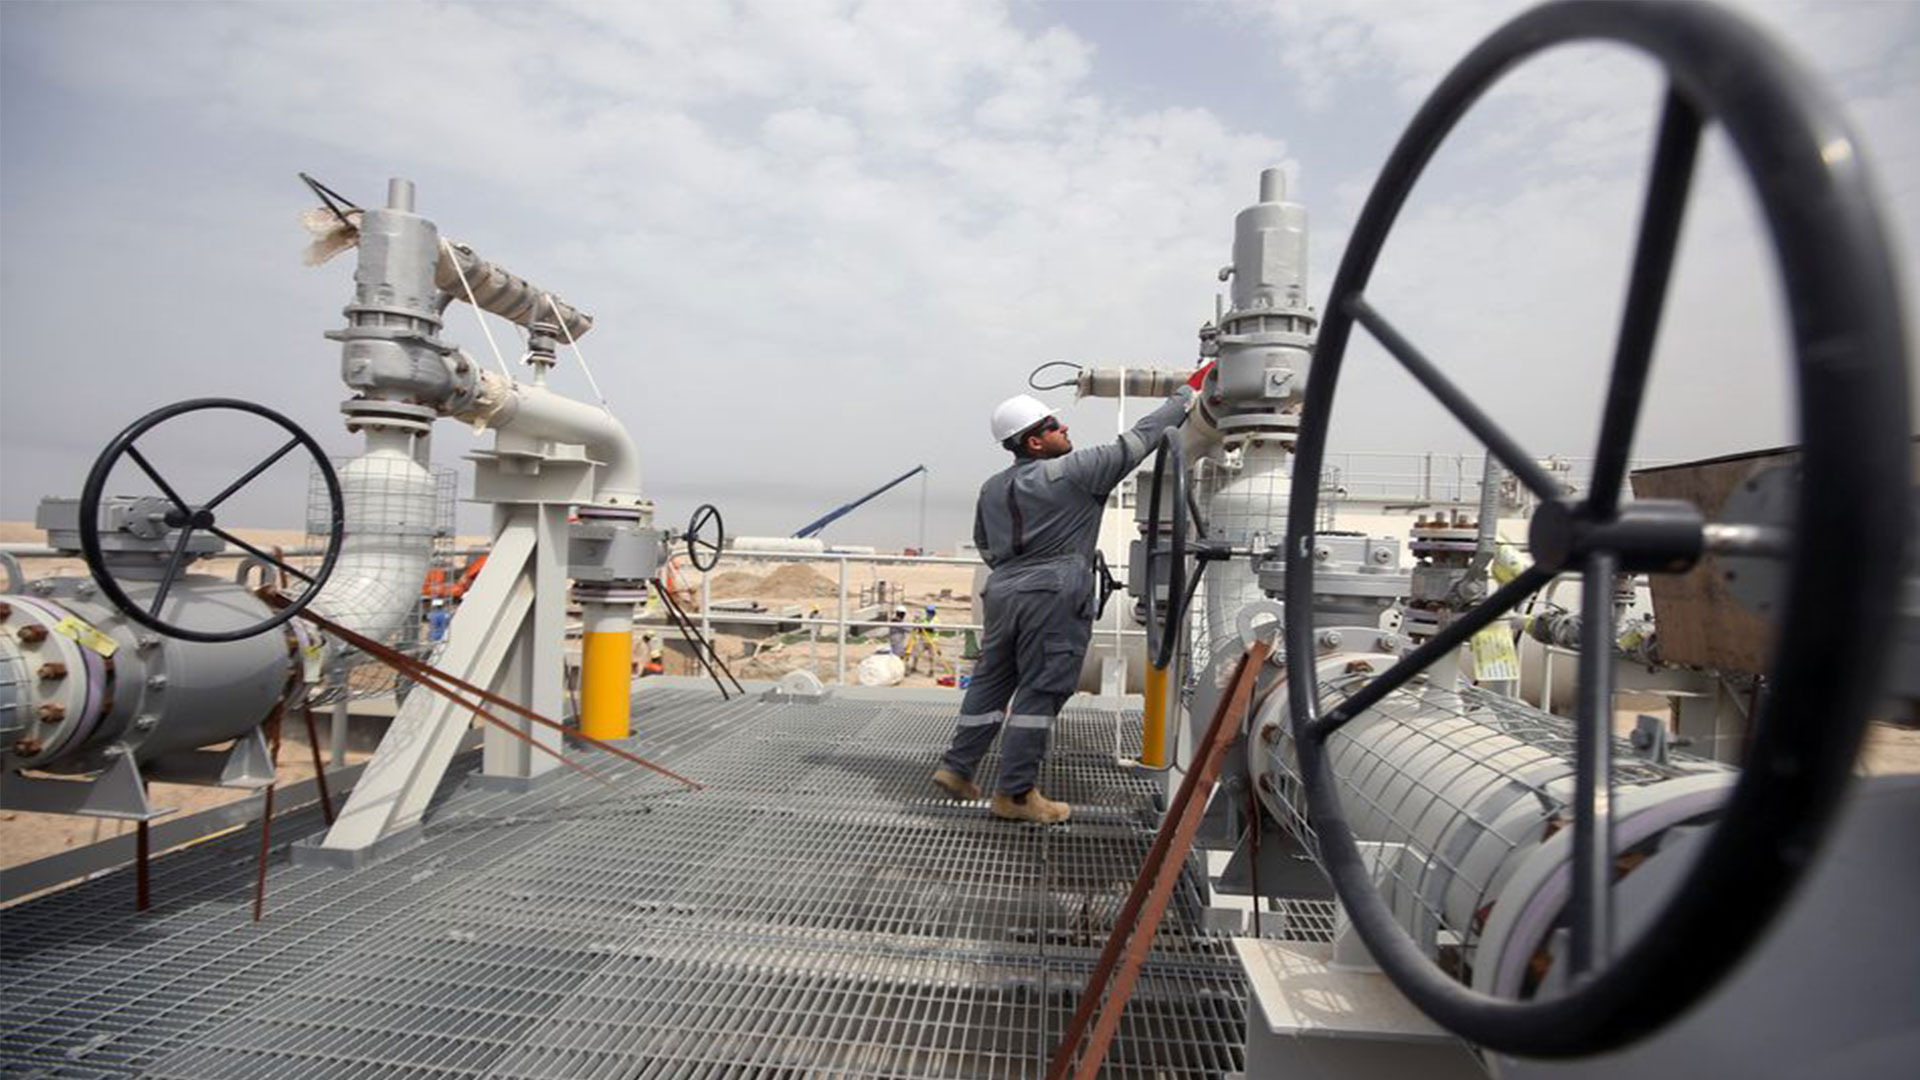  A worker is seen at Iraq's Majnoon oilfield near Basra, Iraq, March 31, 2021. Picture taken March 31, 2021. REUTERS/Essam Al-Sudani